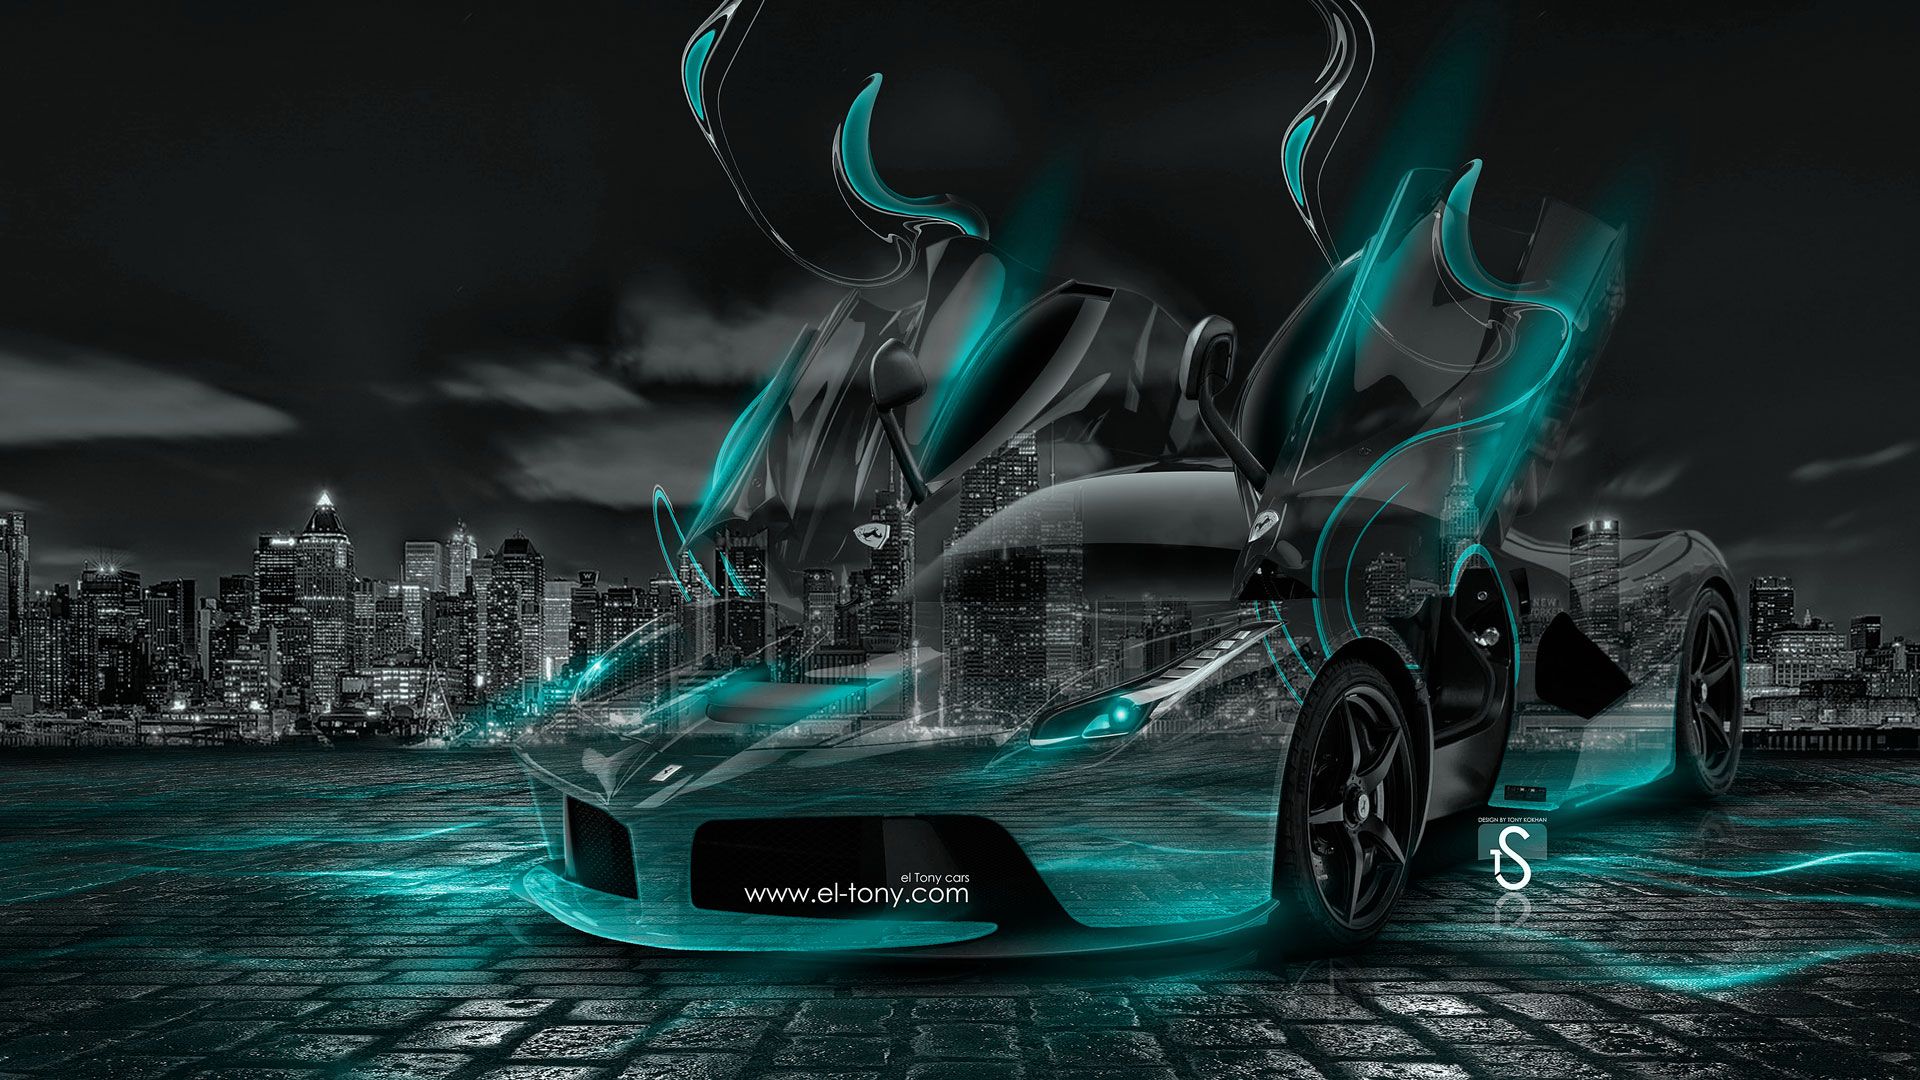 LaFerrari Fantasy Crystal City Energy Car 2014 el Tony